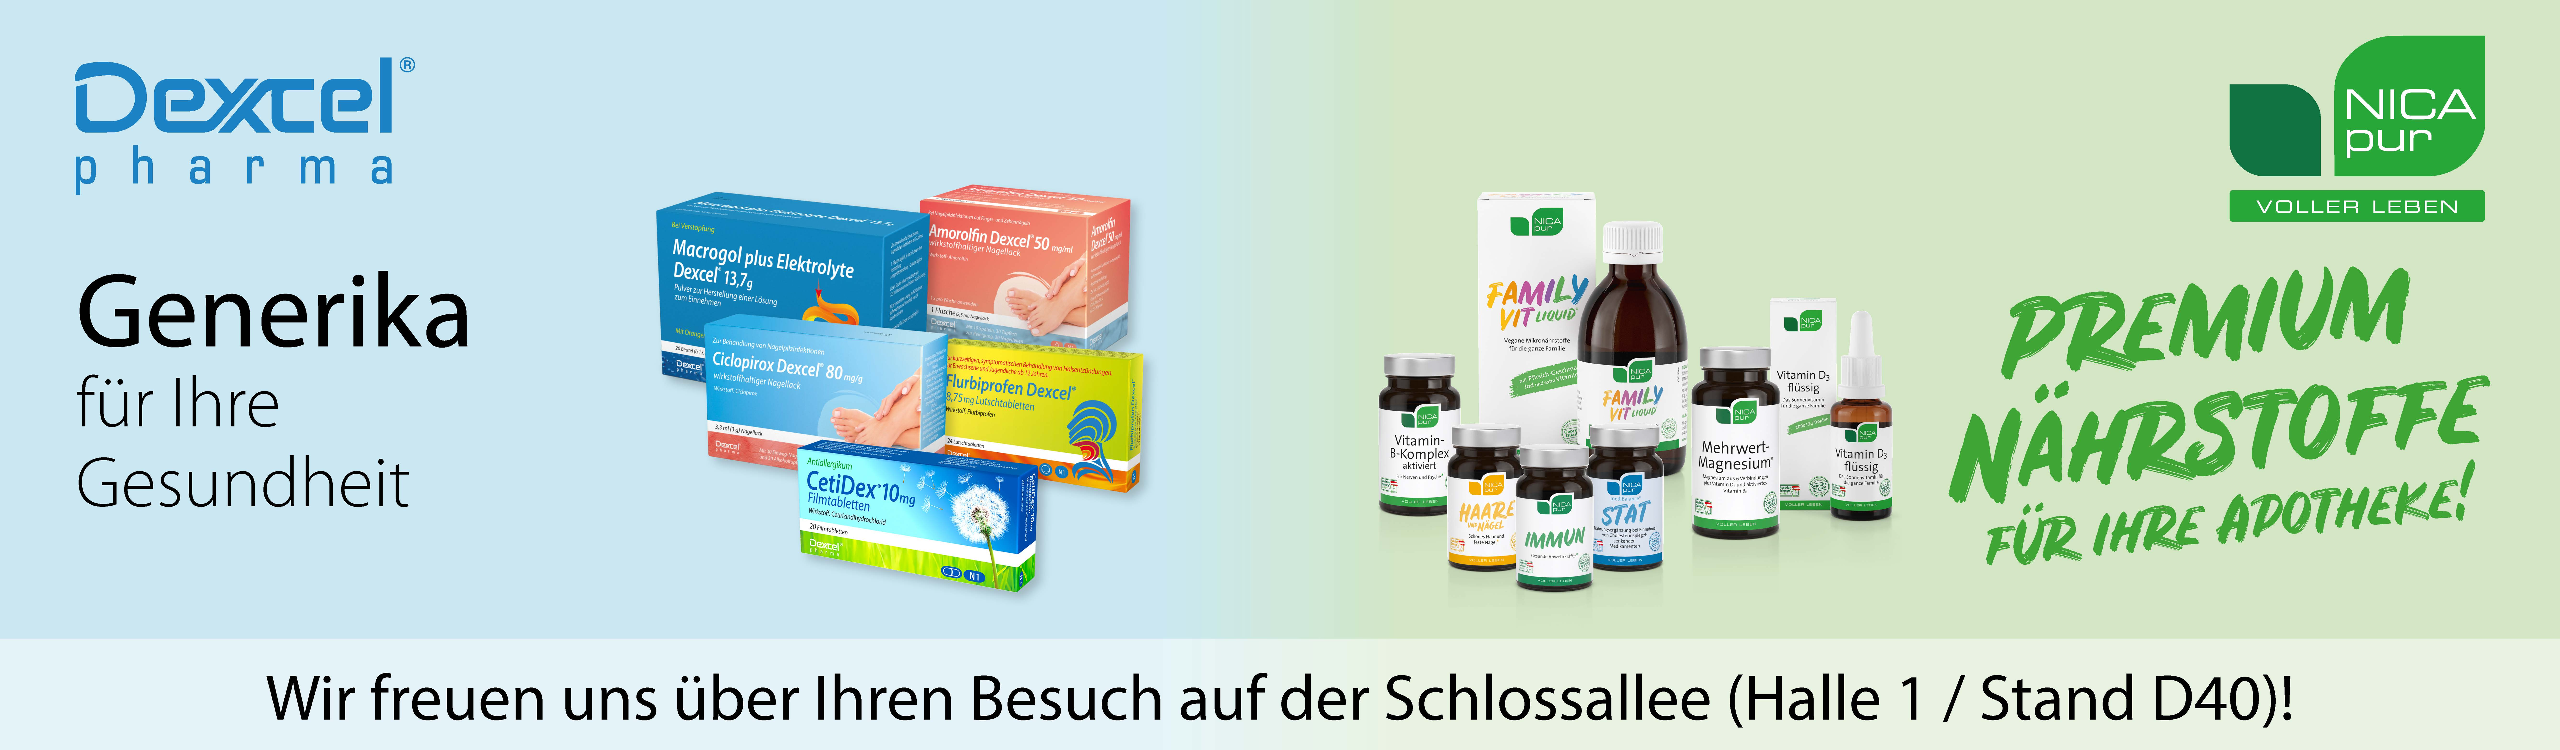 Dexcel Pharma GmbH